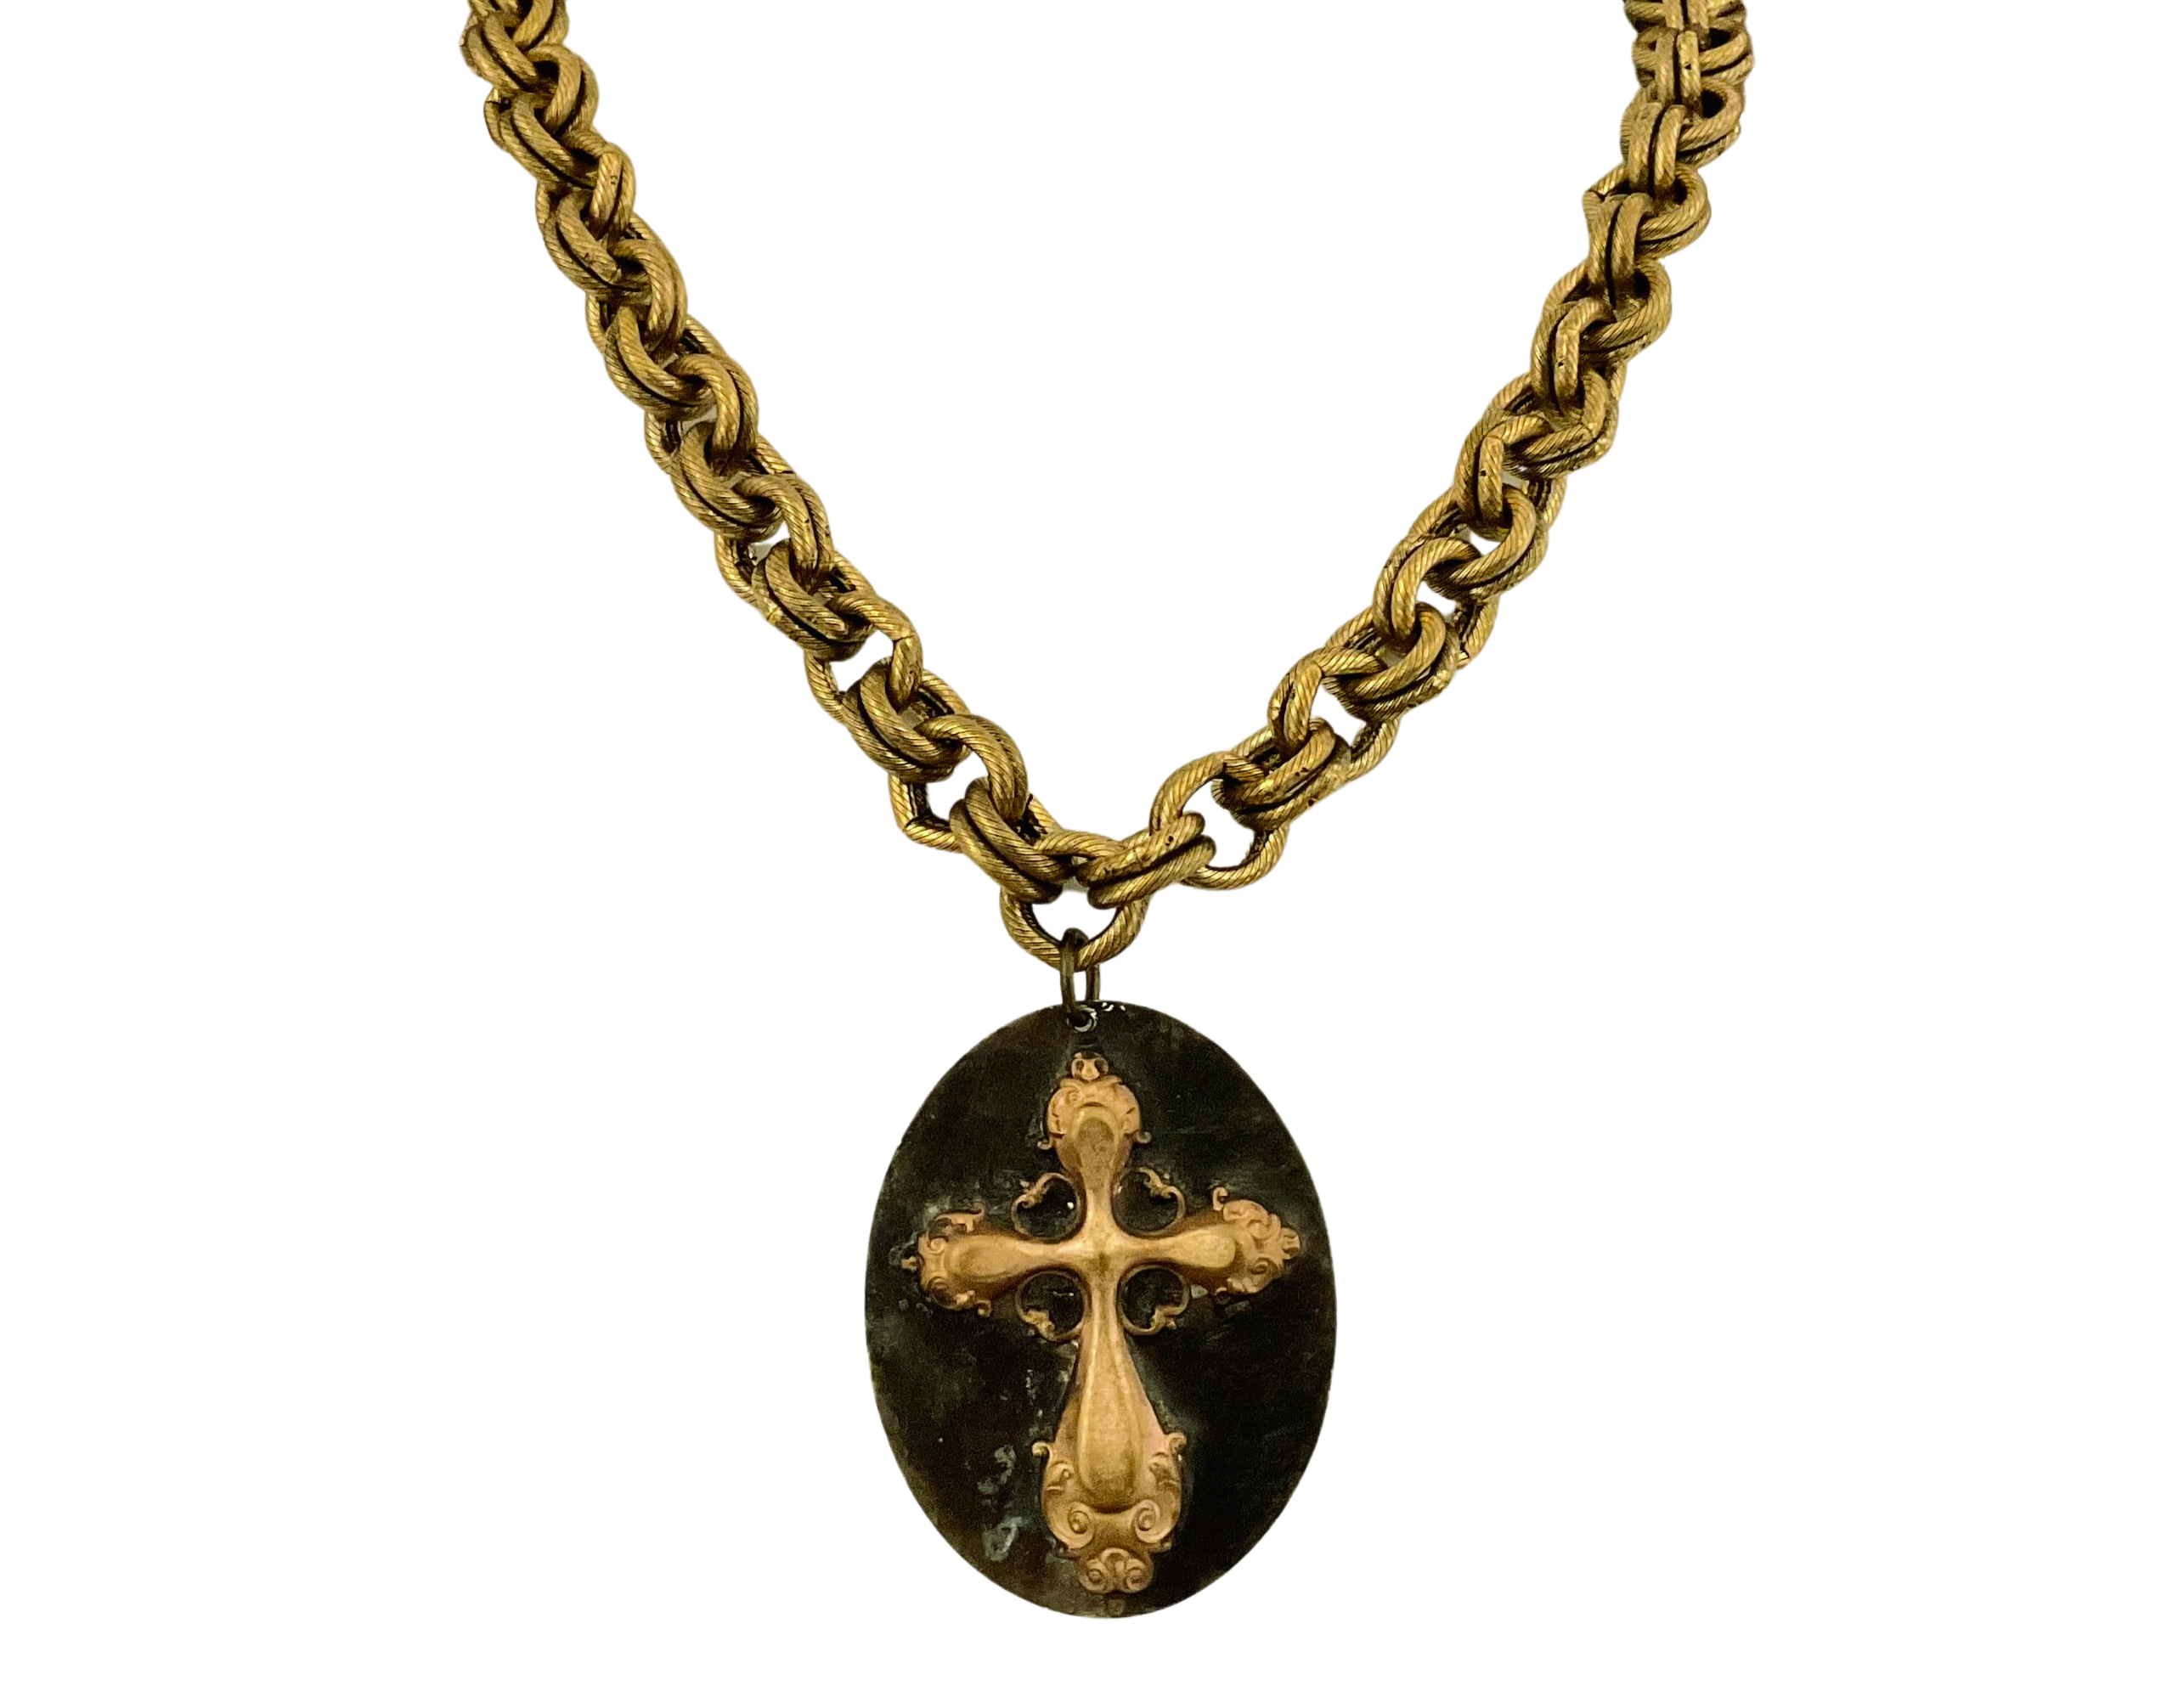 Antique Brass Chain with Artisan Cross Pendant